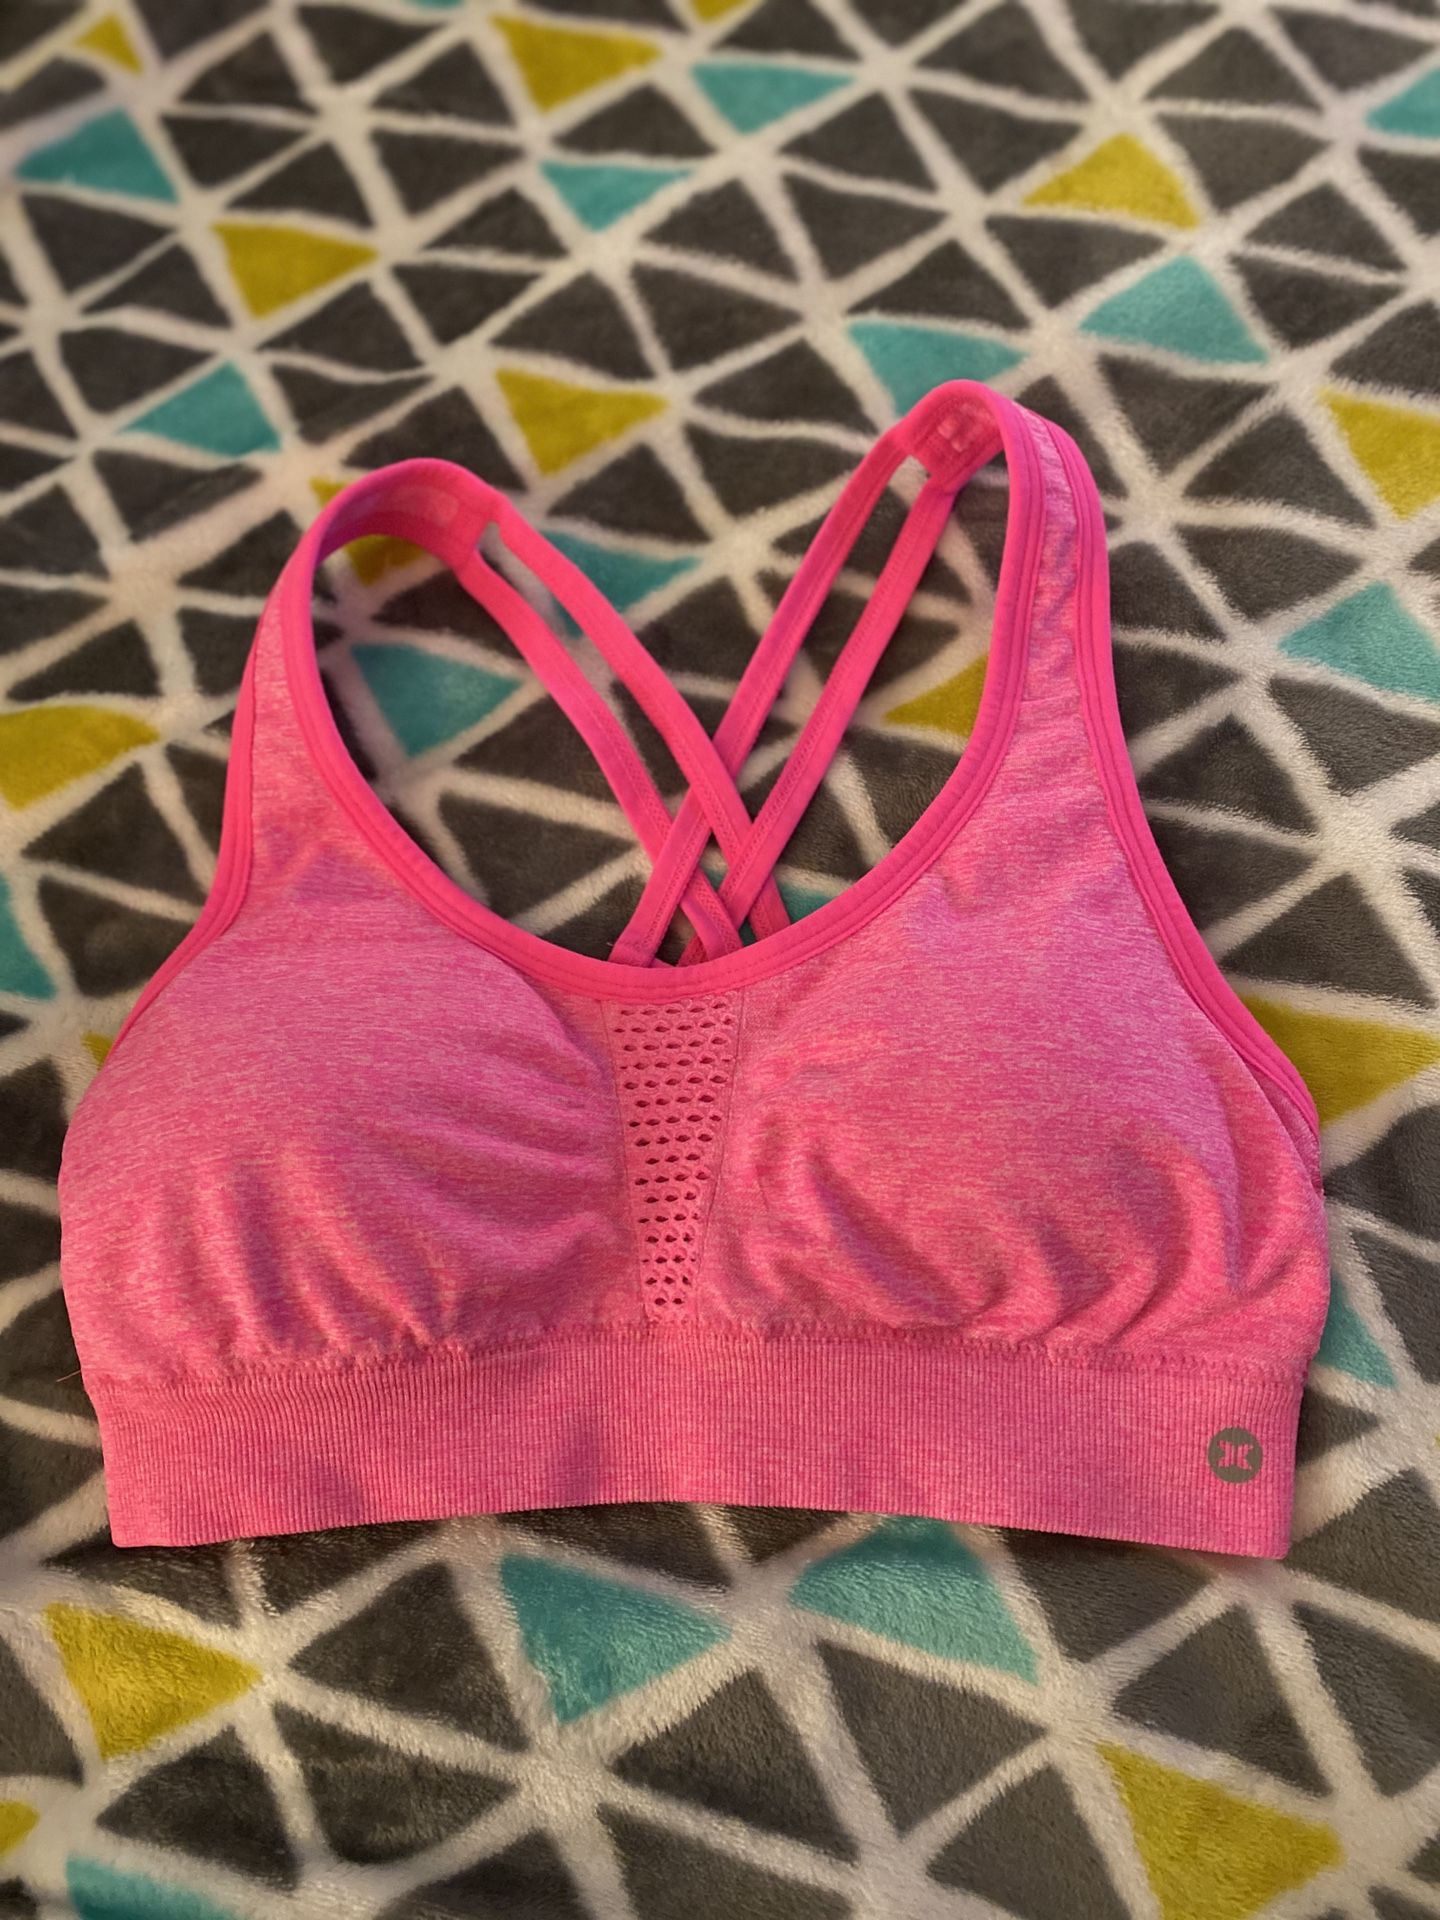 Hot pink women’s sports bra